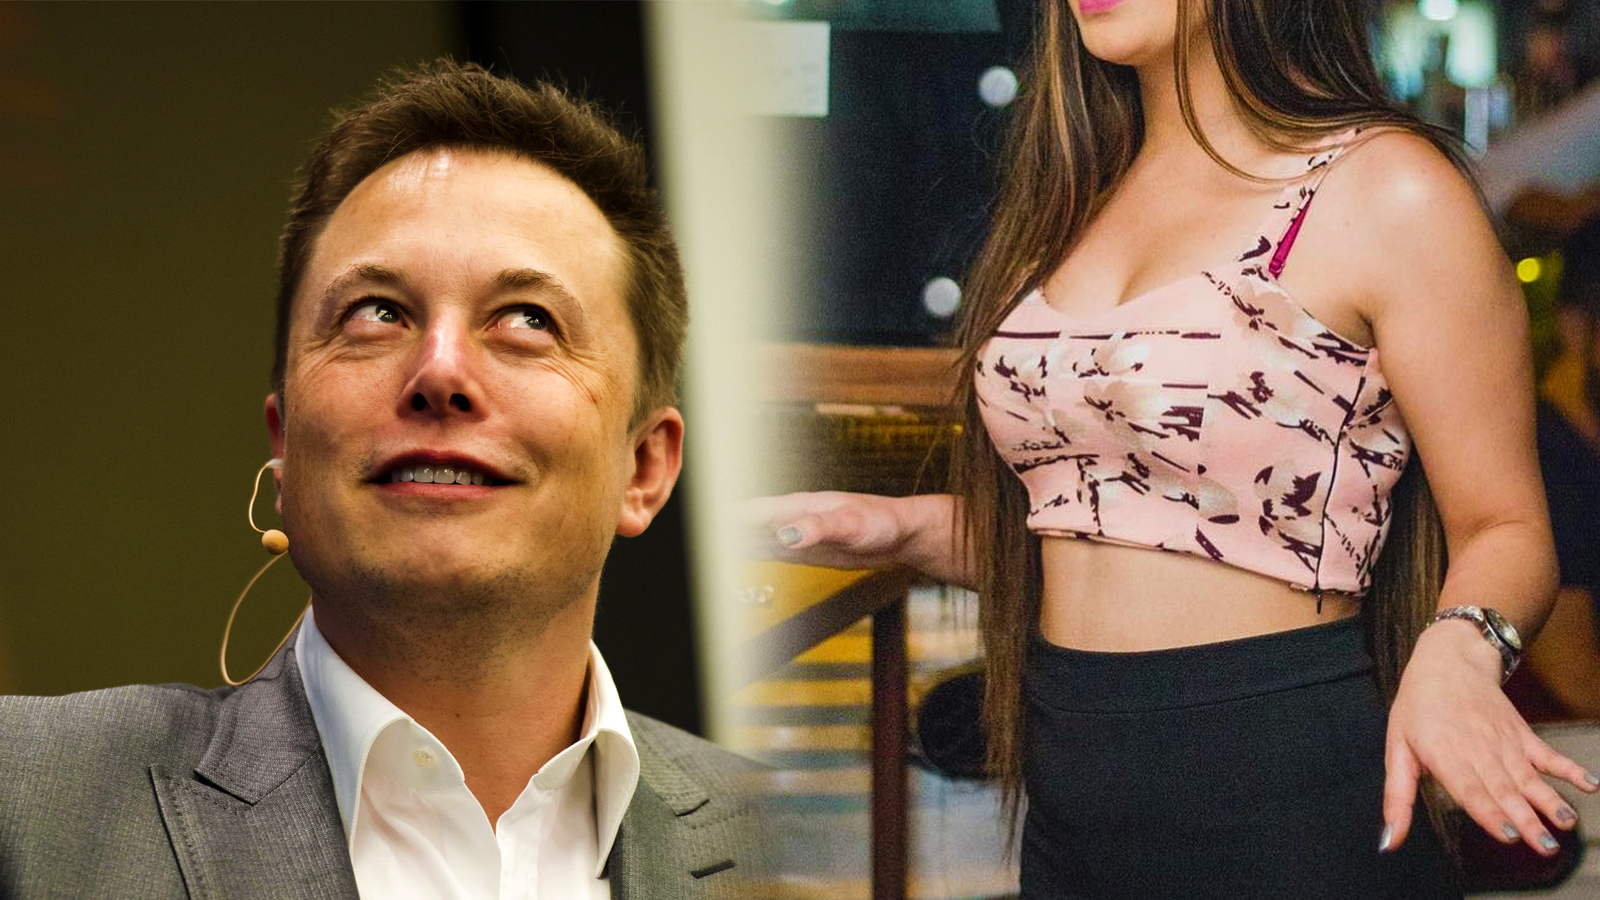 Allegation on Elon Musk